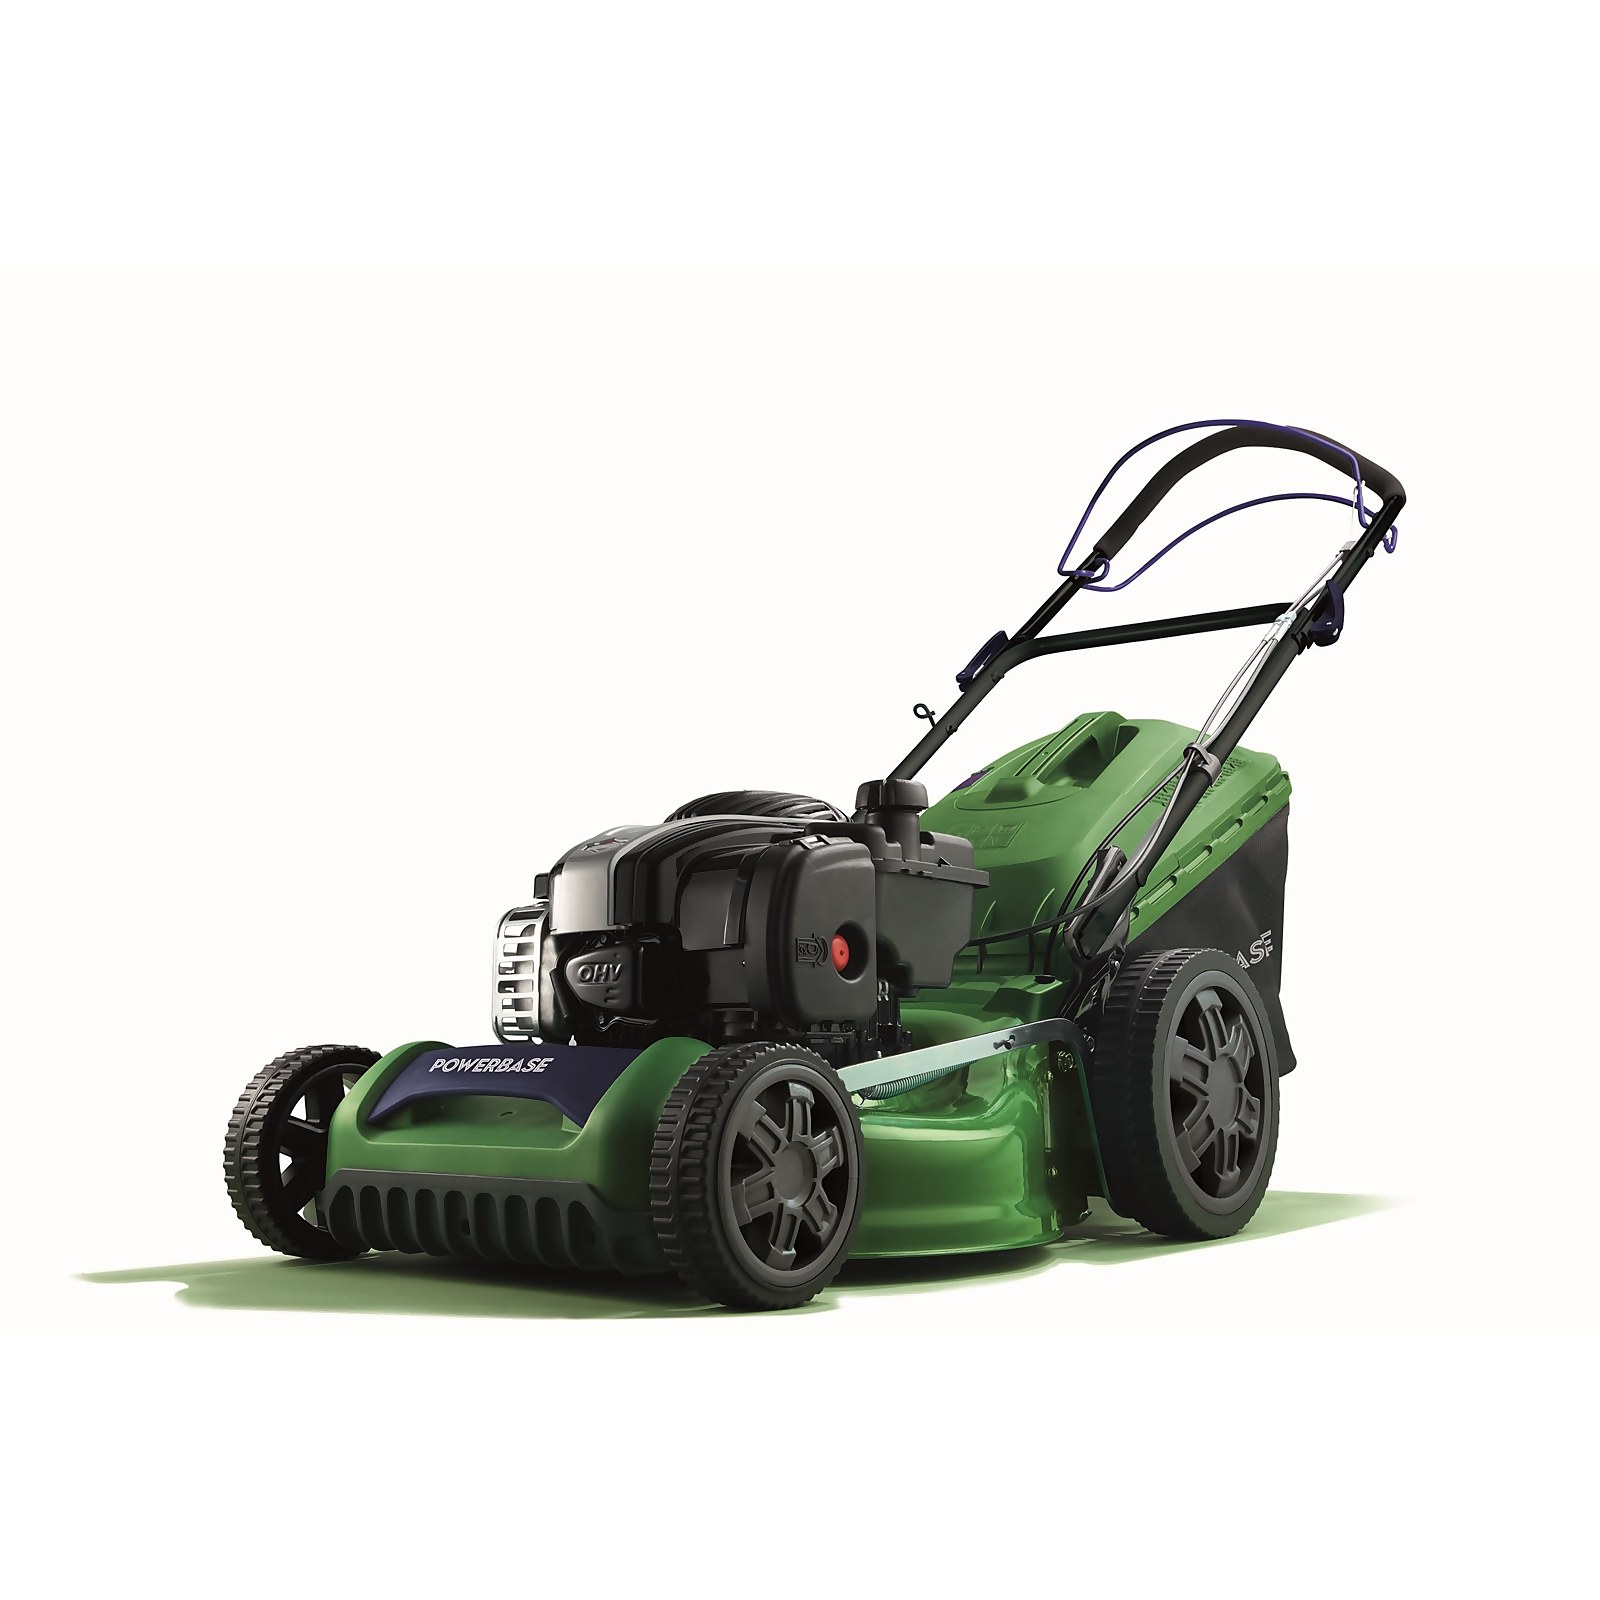 Powerbase 46cm 500e Petrol Self-Propelled Lawn Mower